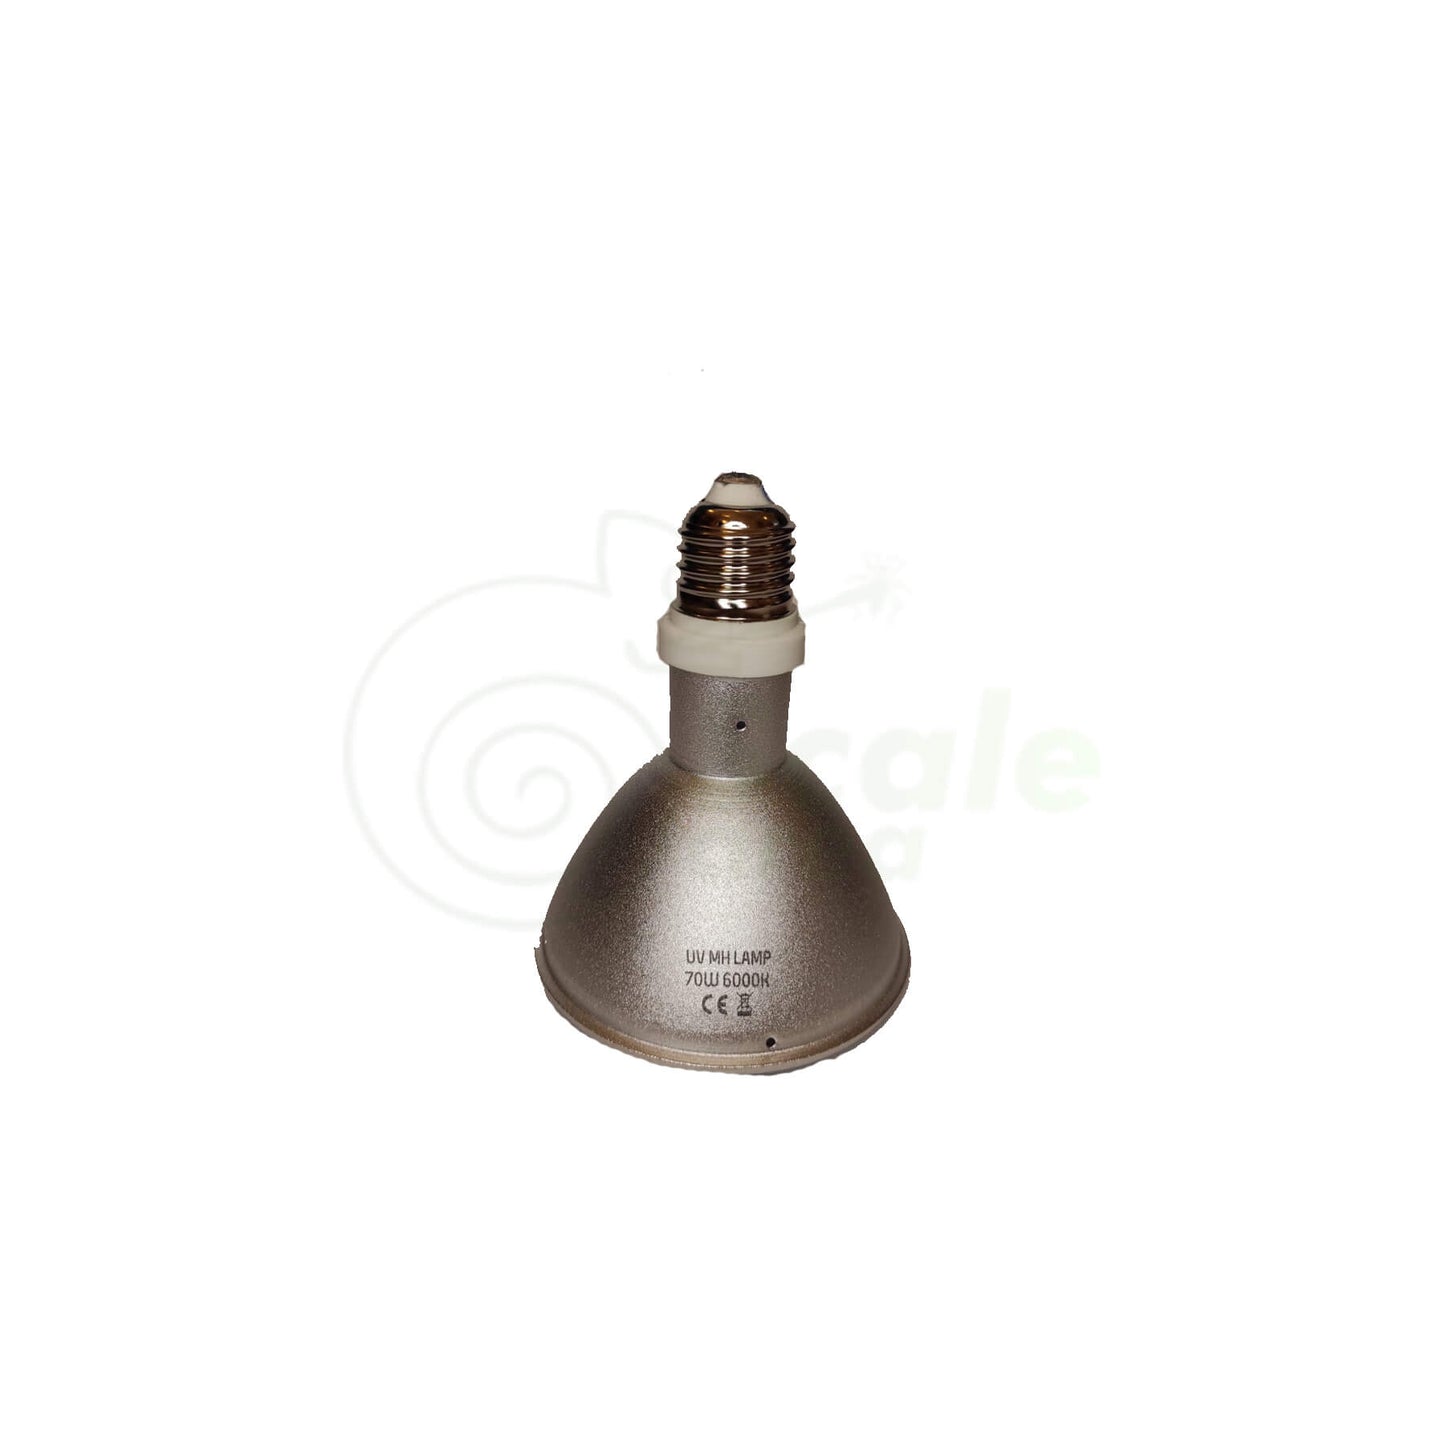 HID bulb (UVB + UVA + HEAT + LIGHT)